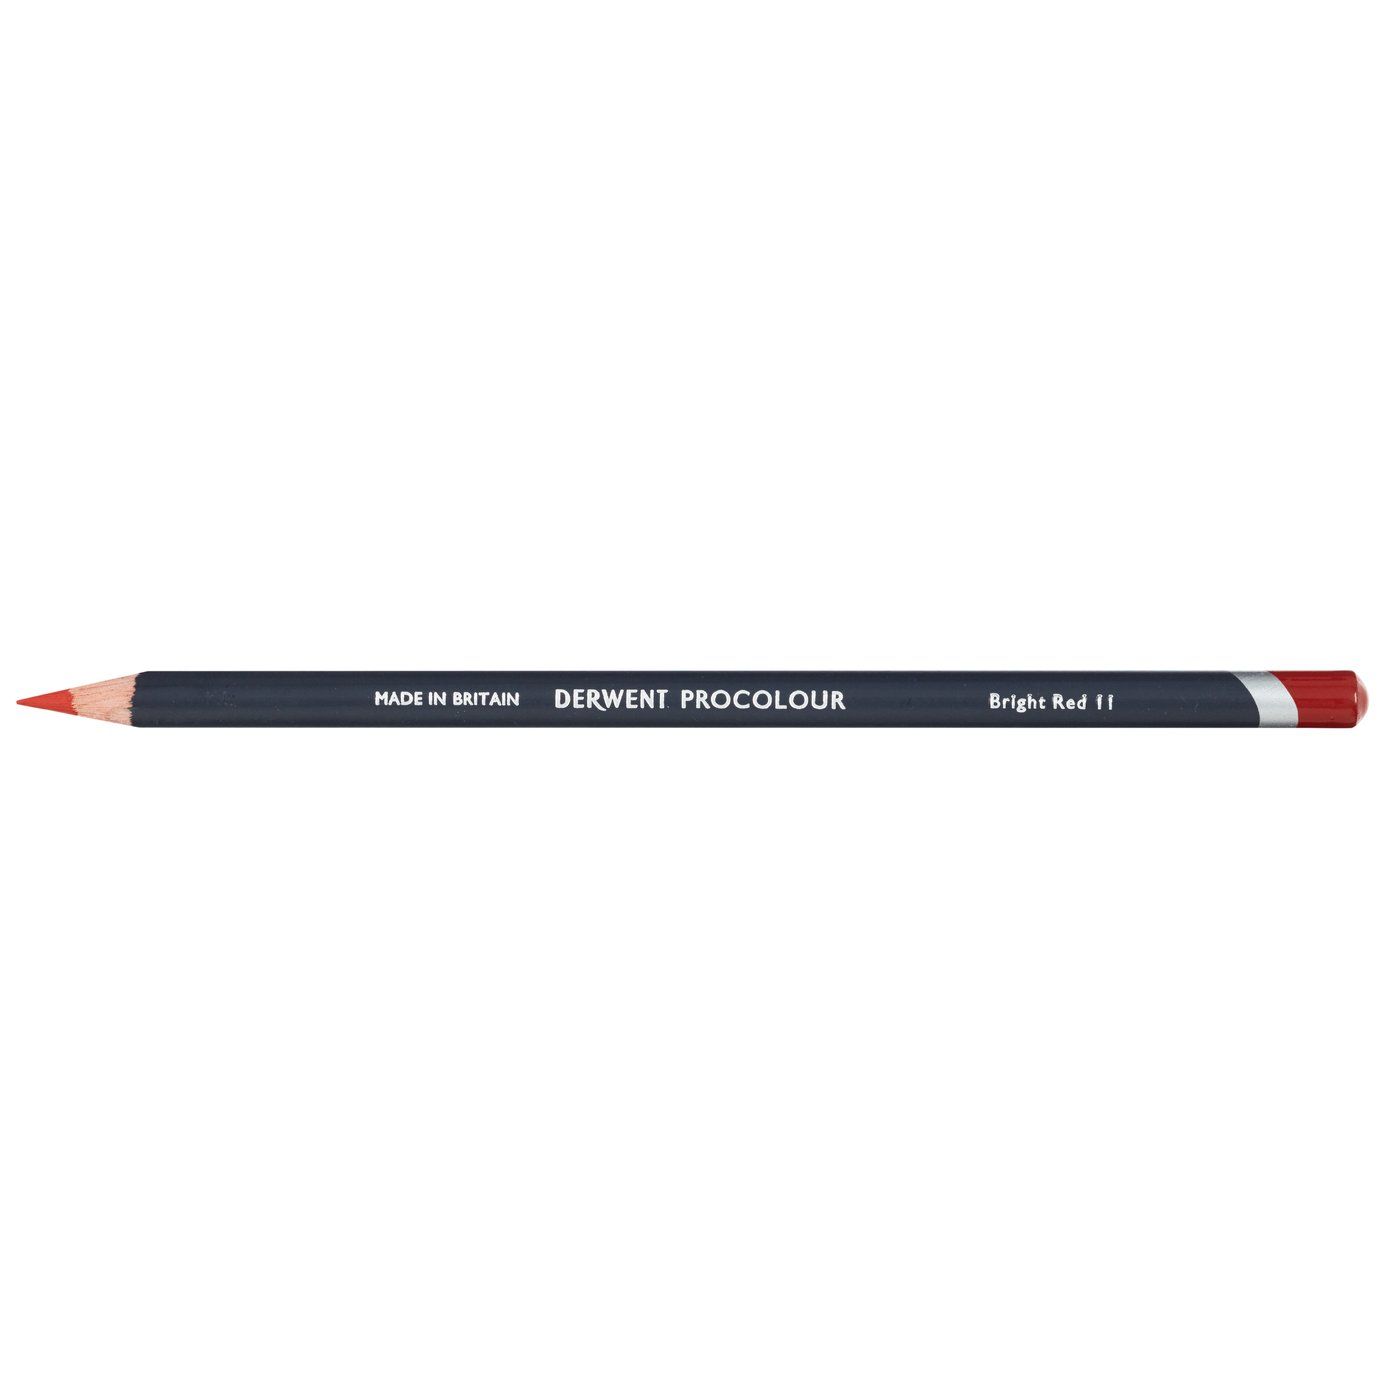 Derwent Procolour Pencil - 11 Bright Red